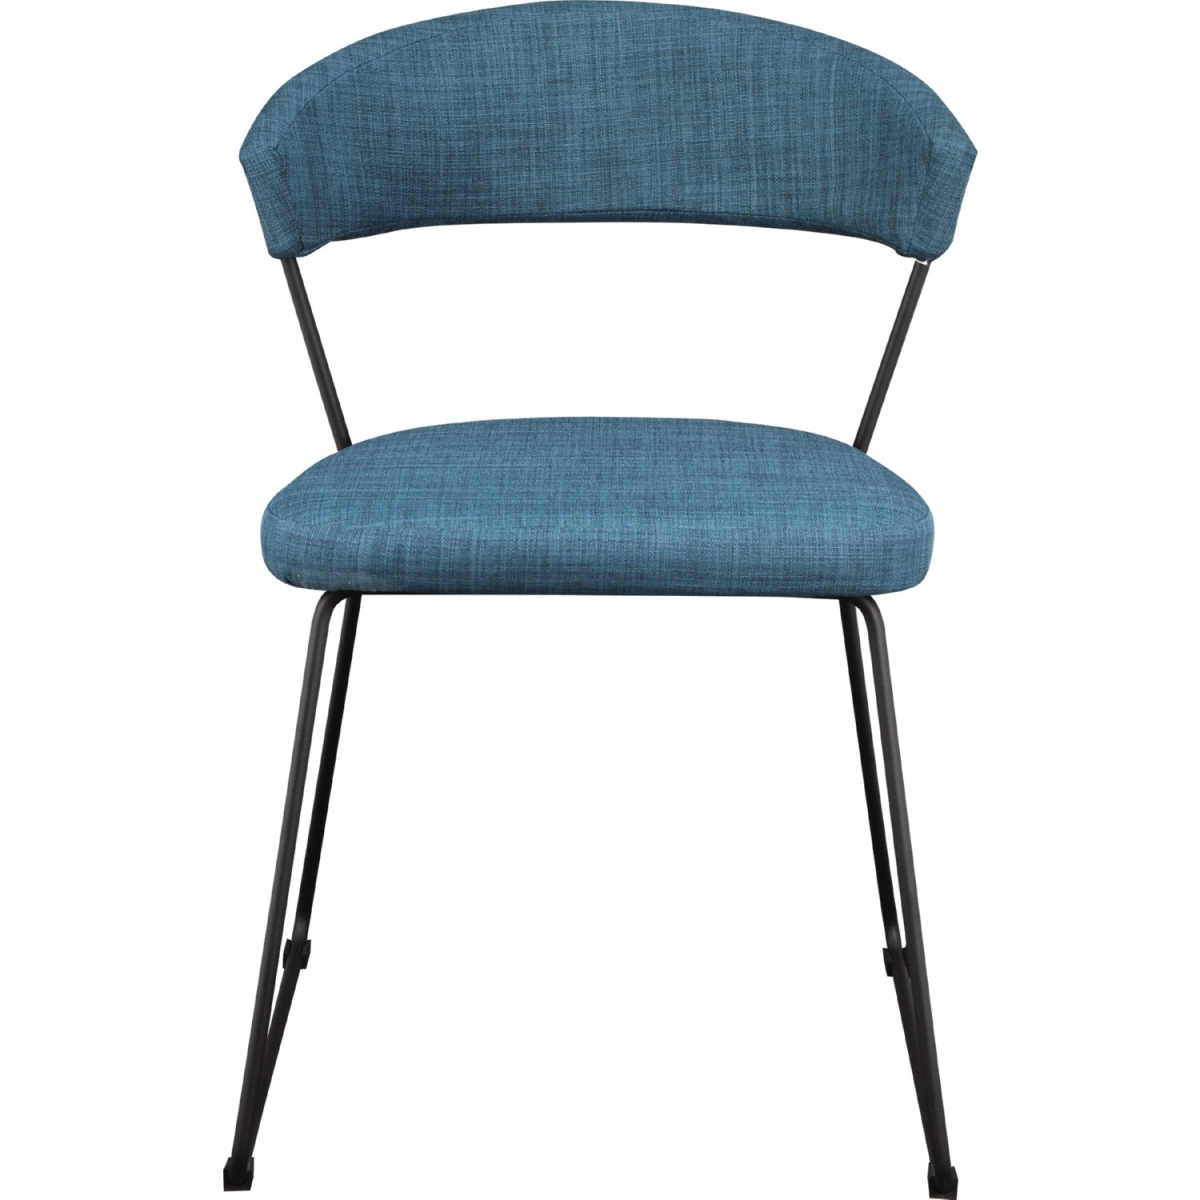 Hk-1010-50 Adria Dining Chair In Blue Fabric On Black Metal Legs